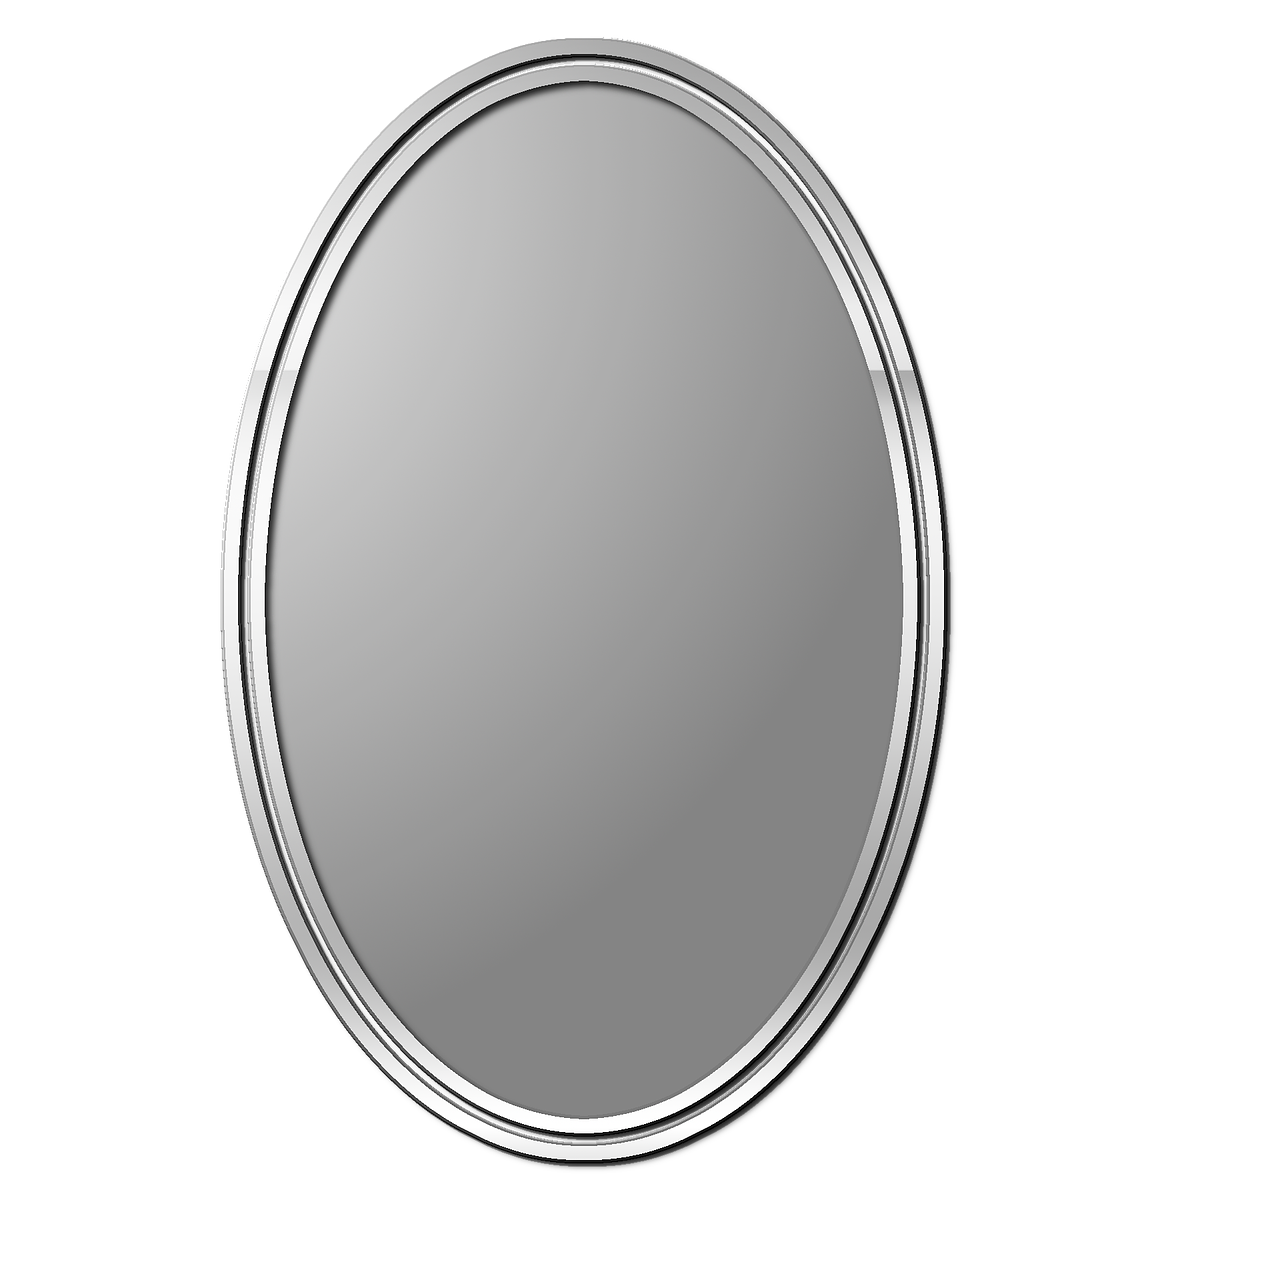  mirror